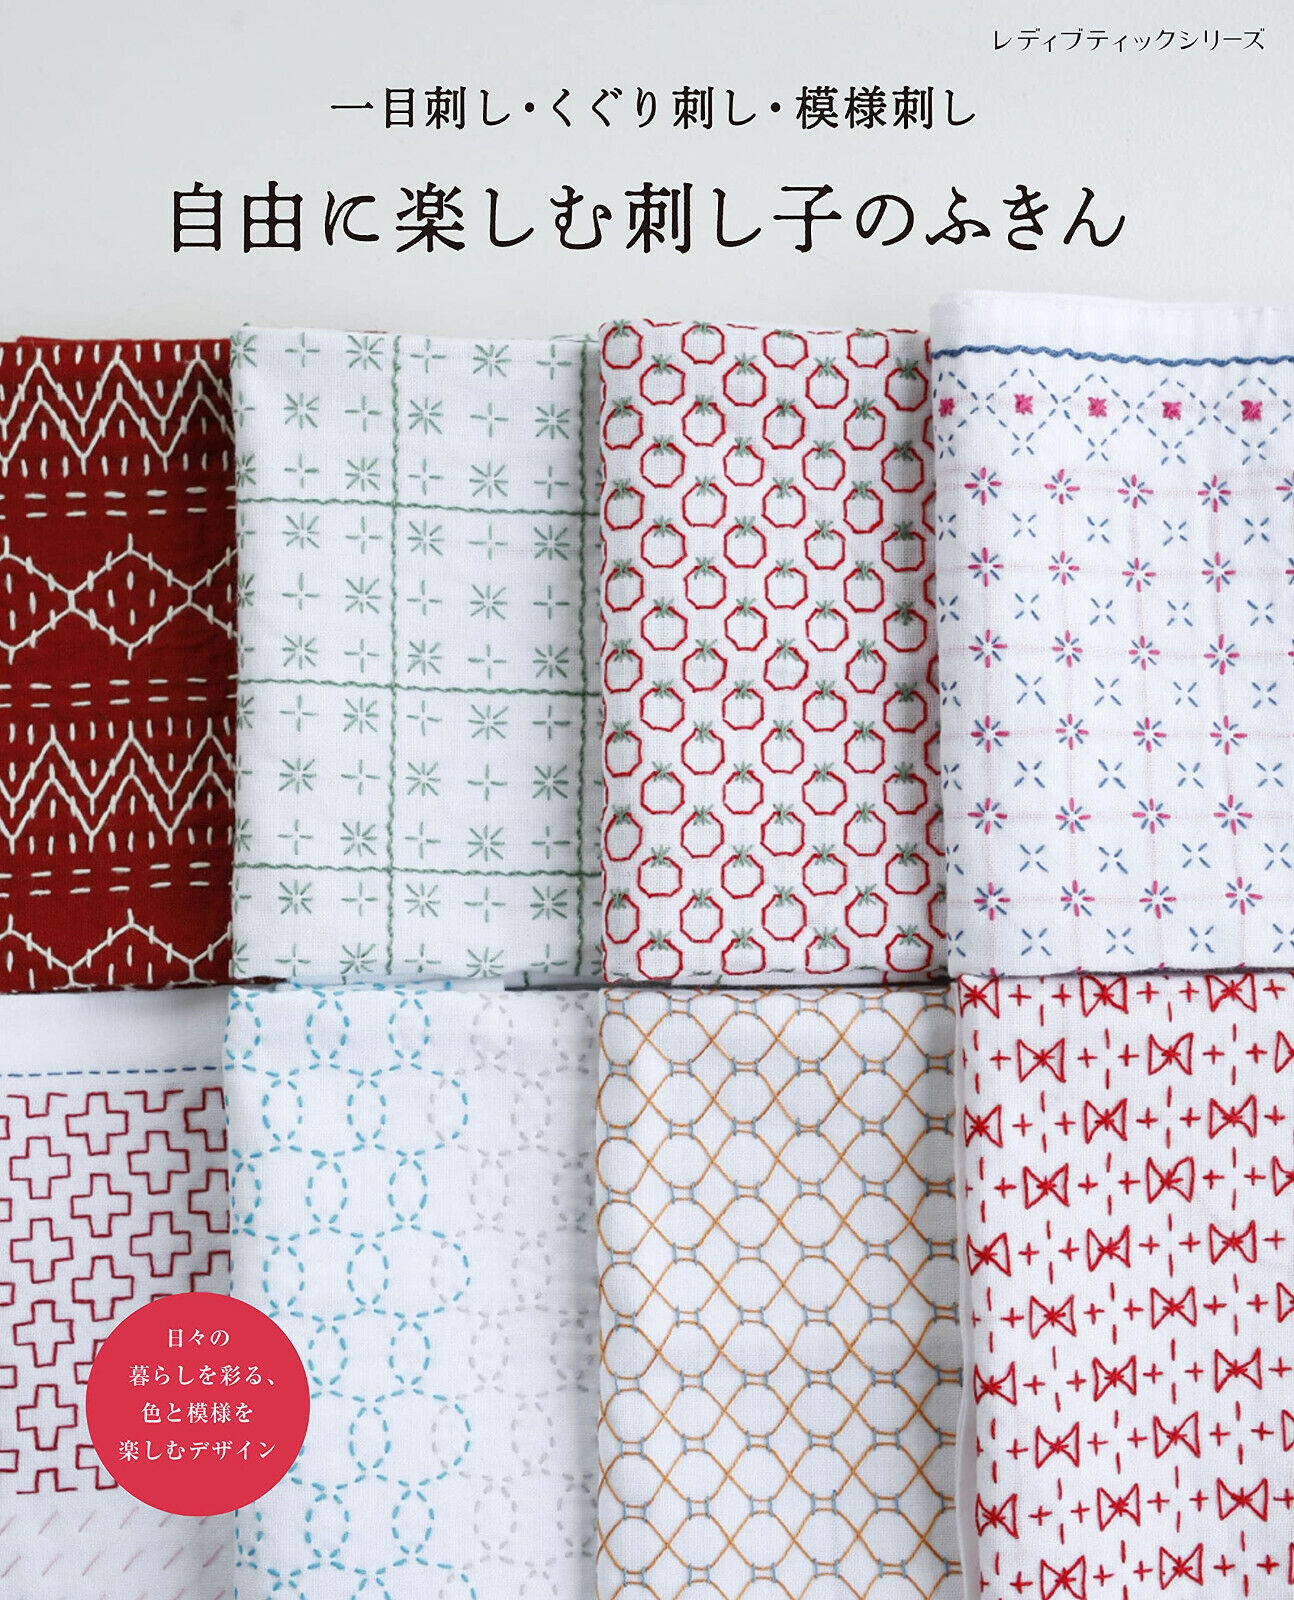 Sashiko Embroidery Cloth To Enjoy Freely /japanese Craft Pattern Book  New!